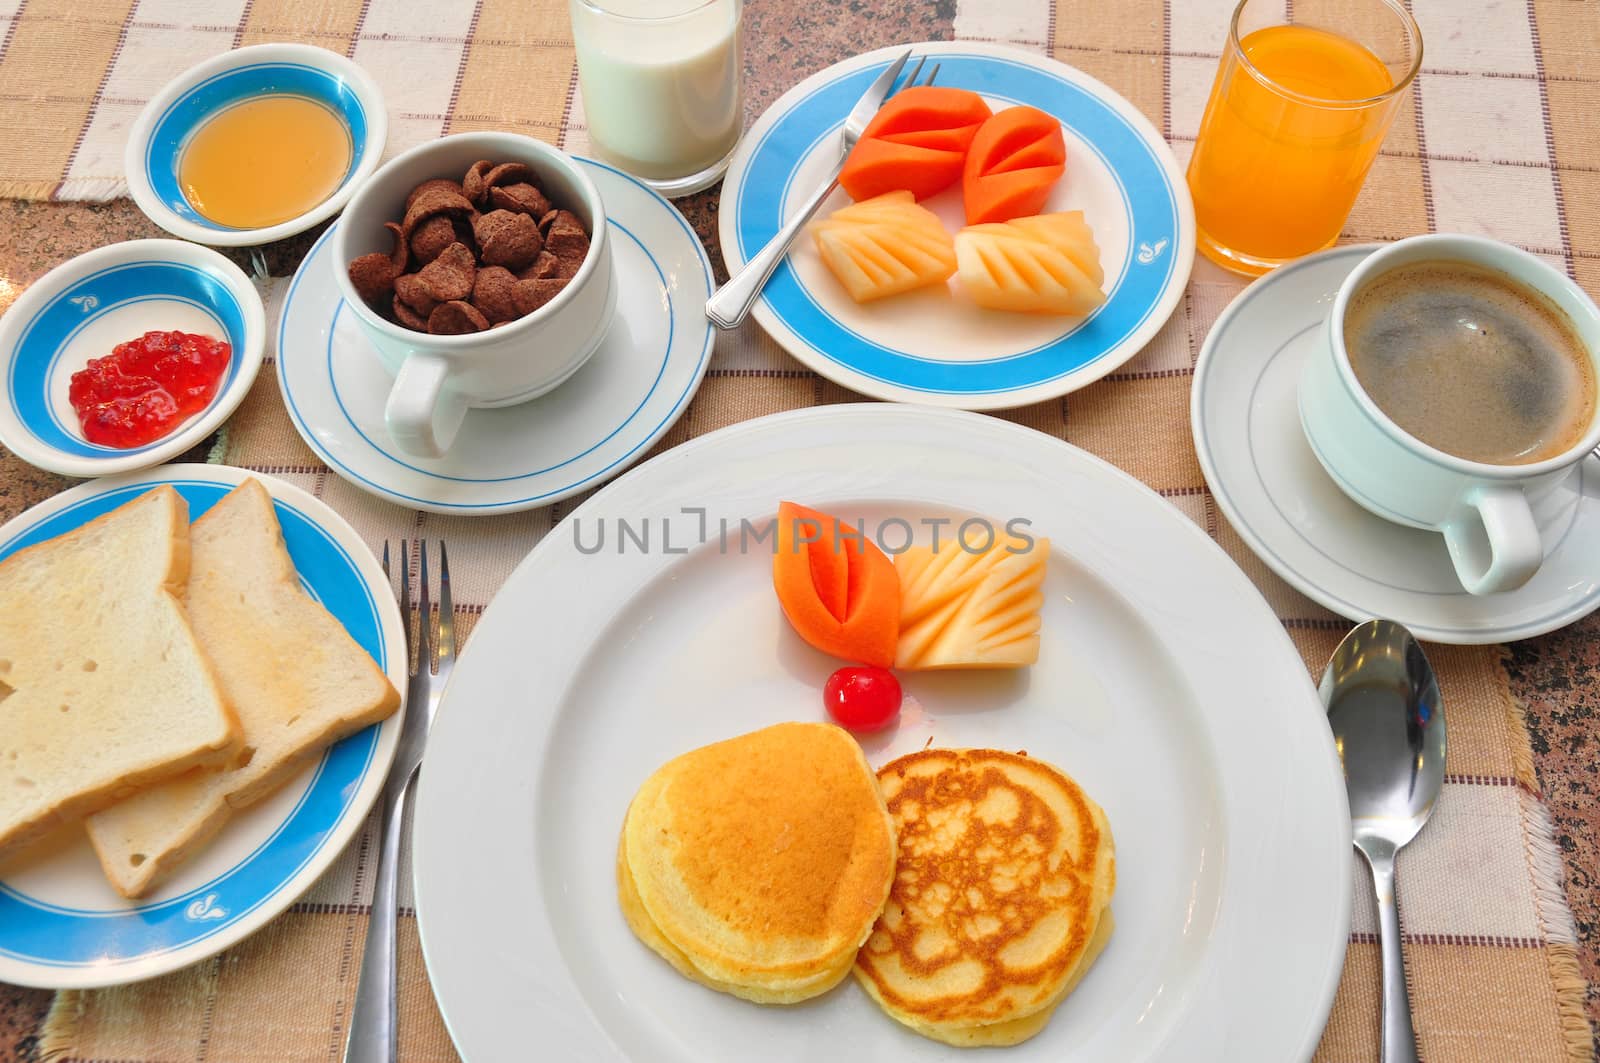 set of american breakfast on table .